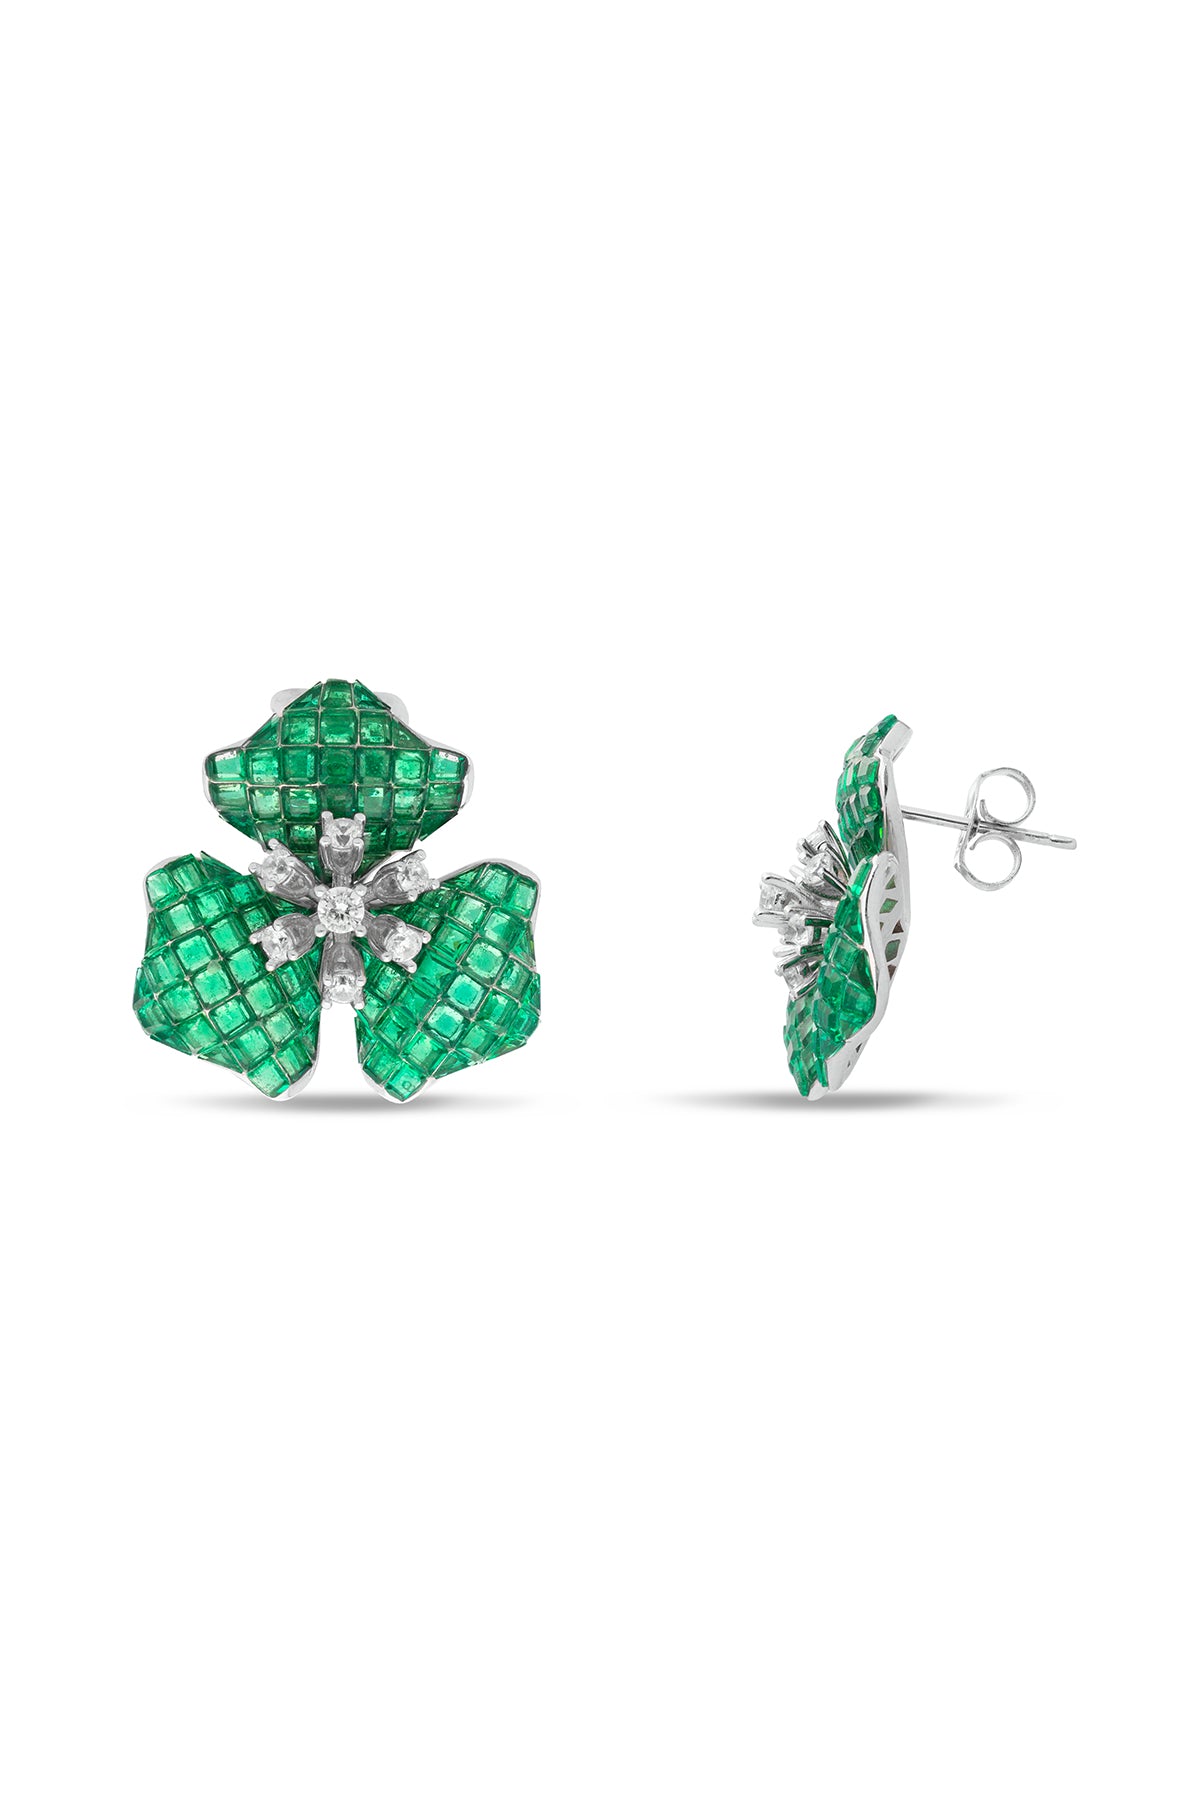 Ethereal Emerald Green Trillium Blossom Ear Studs